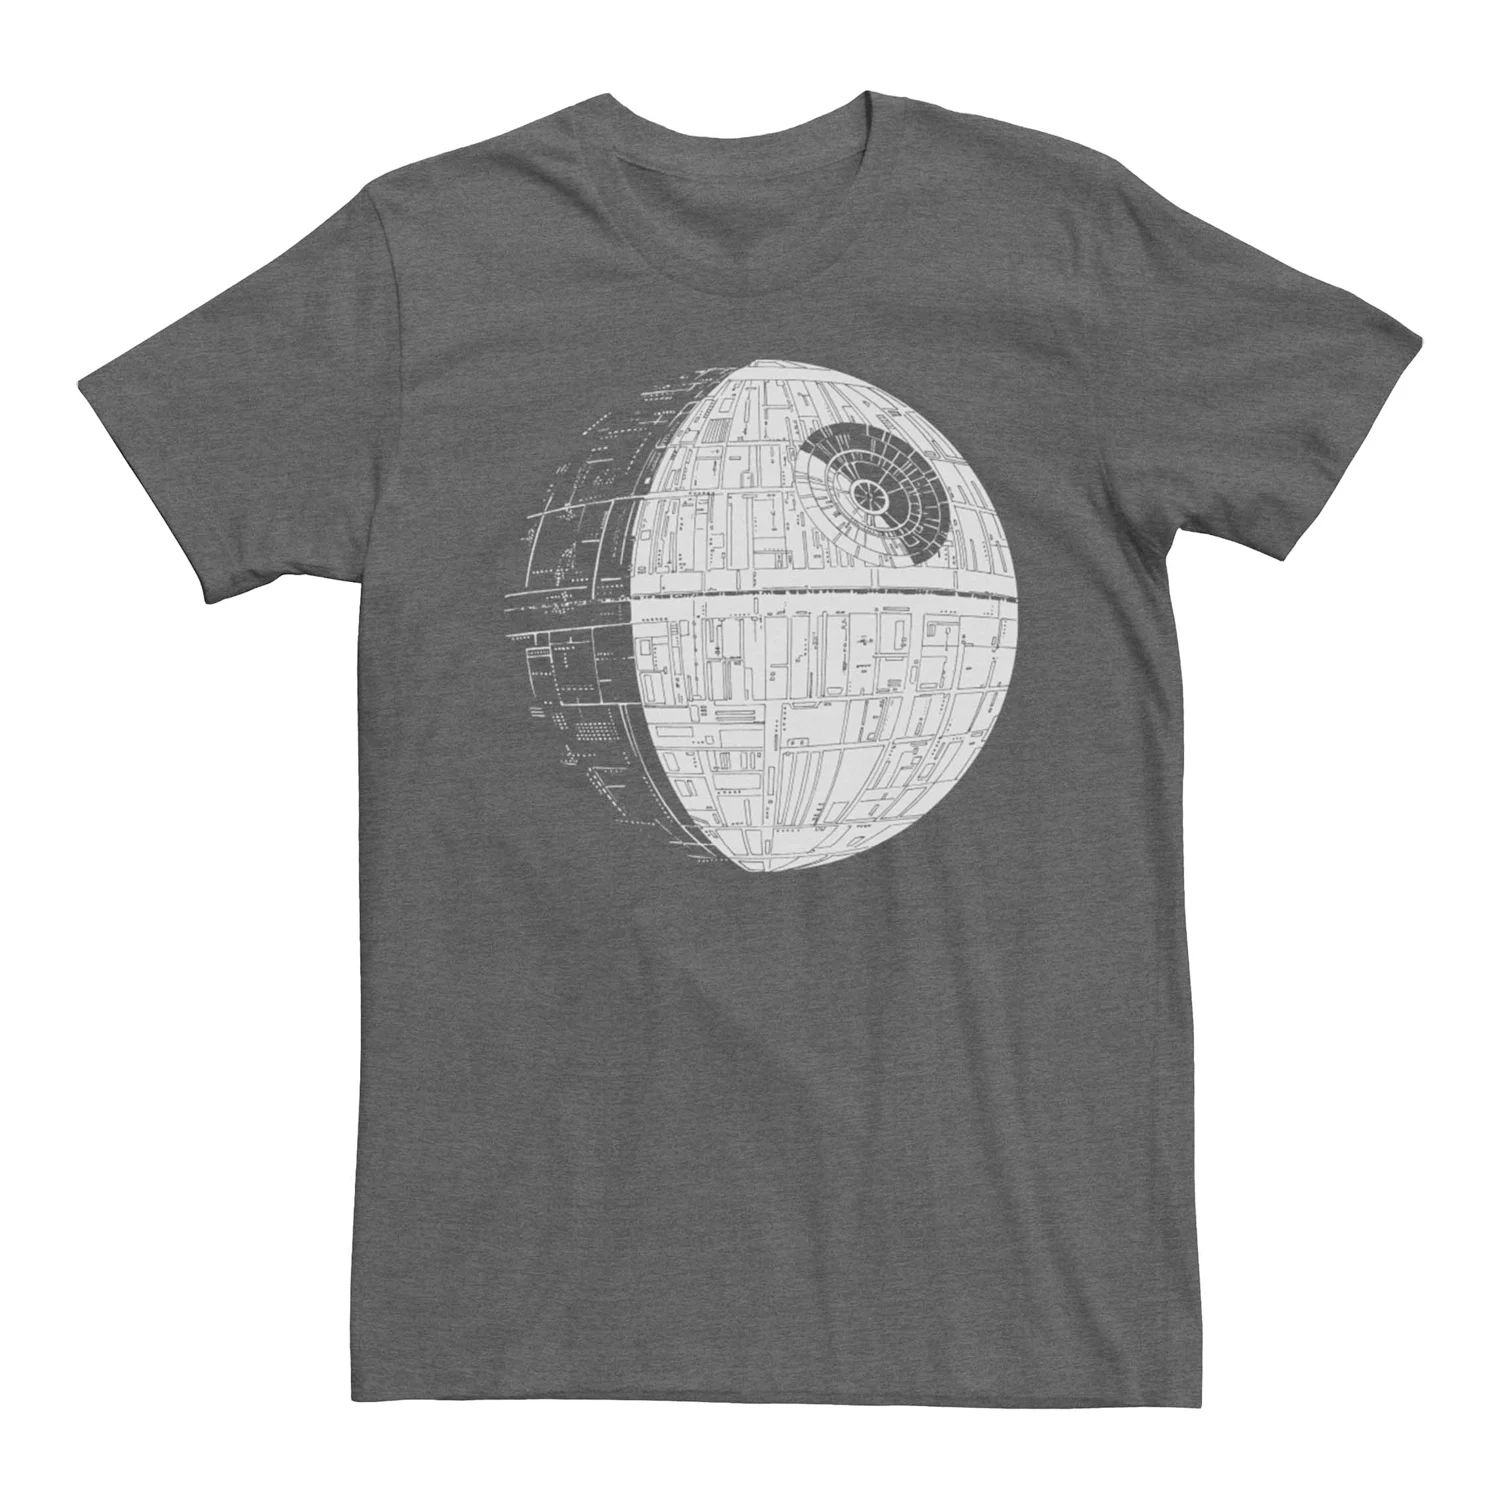 Мужская легкая футболка с рисунком Звезды Войн и Звезды Смерти Licensed Character